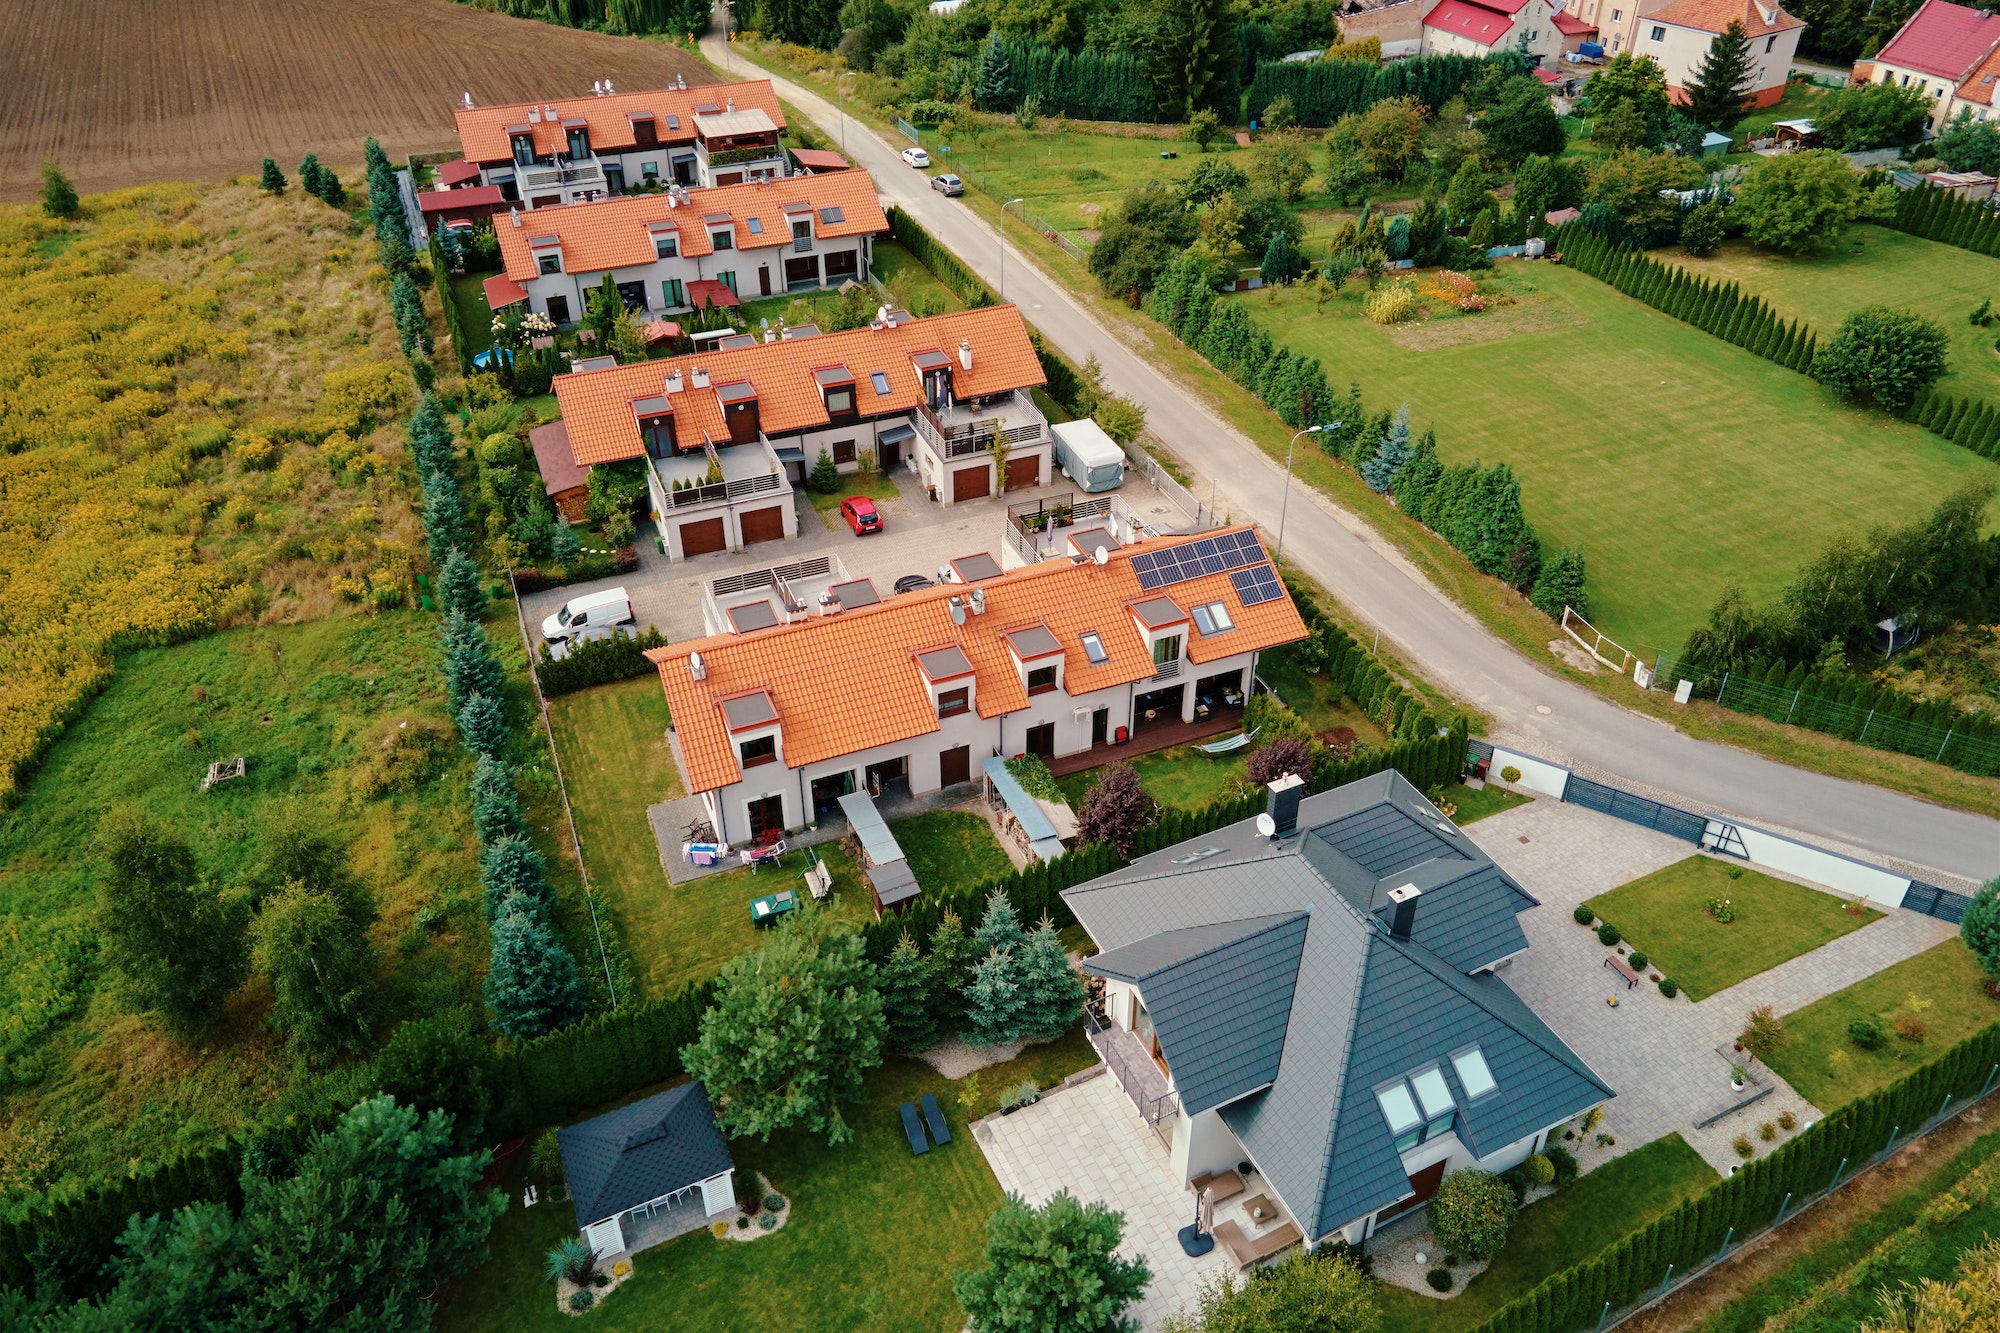 Suburban neighborhood in europe city, aerial view